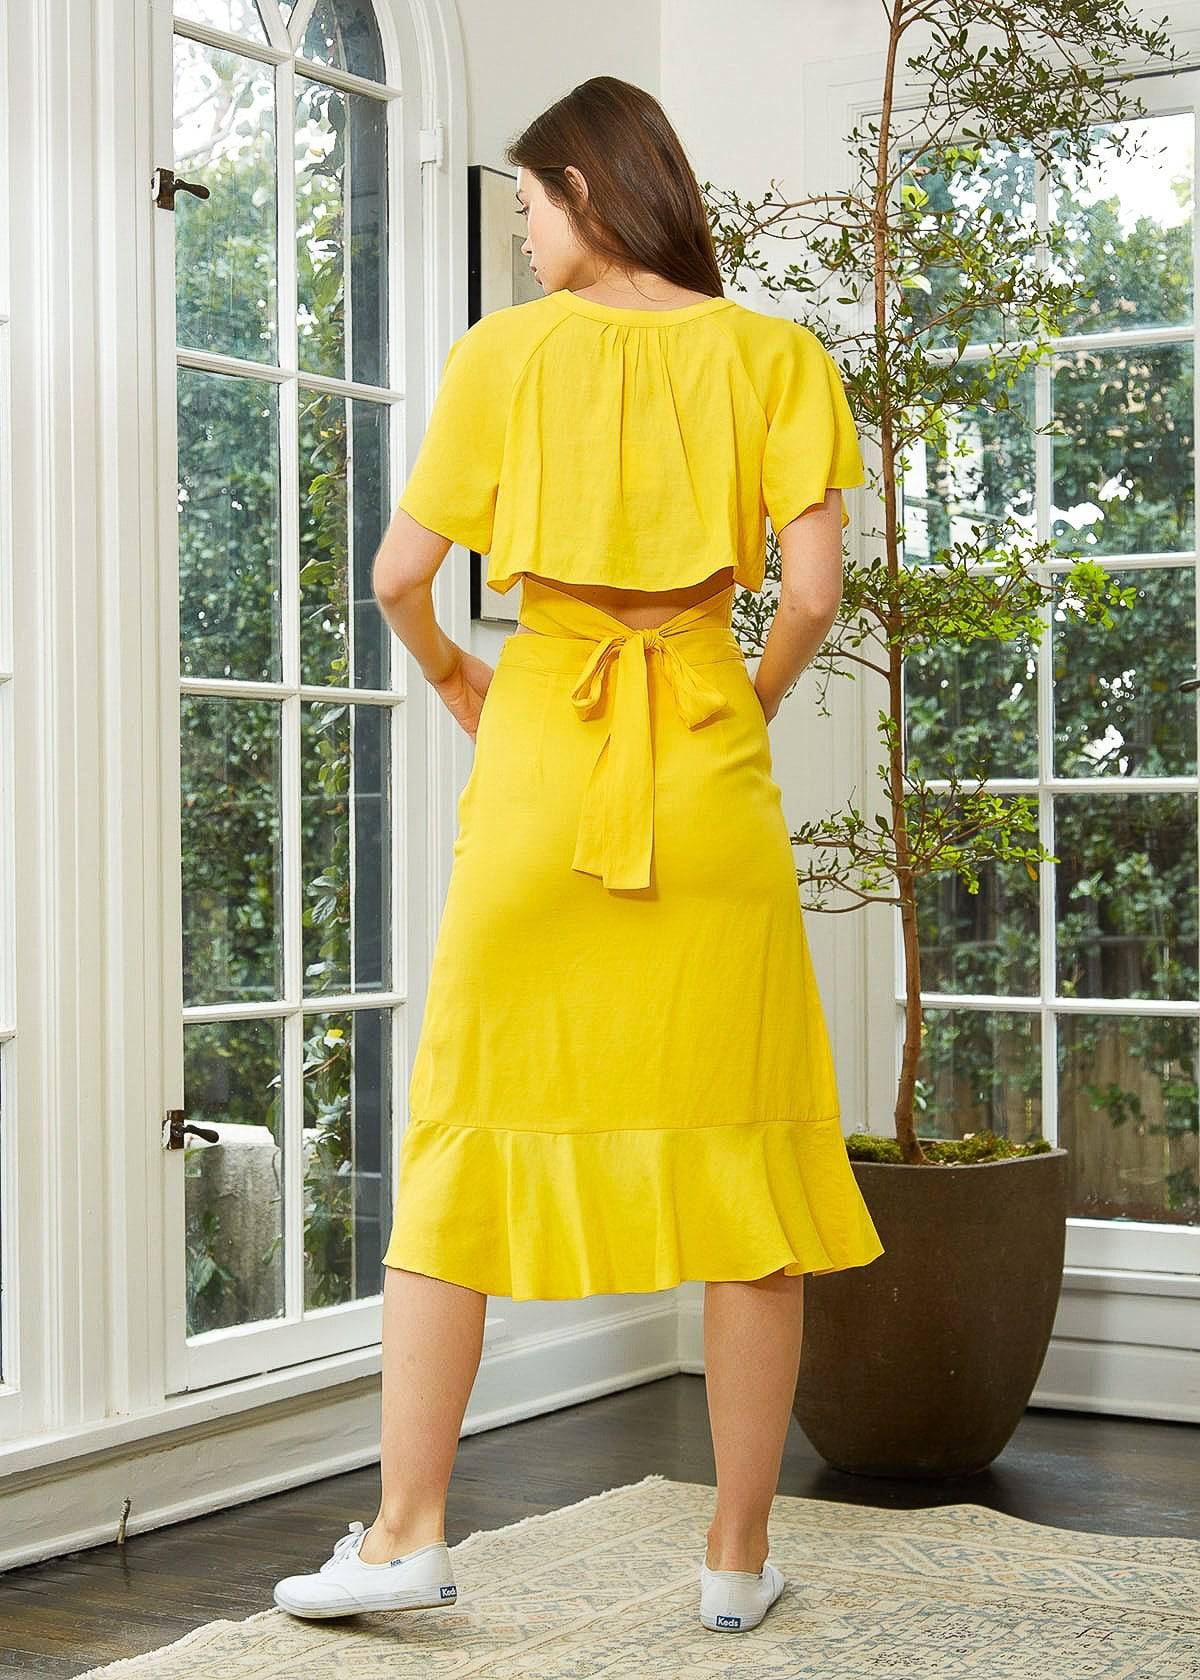 Women's Asymmetrical Hem Button Front Skirt in Yellow by Shop at Konus